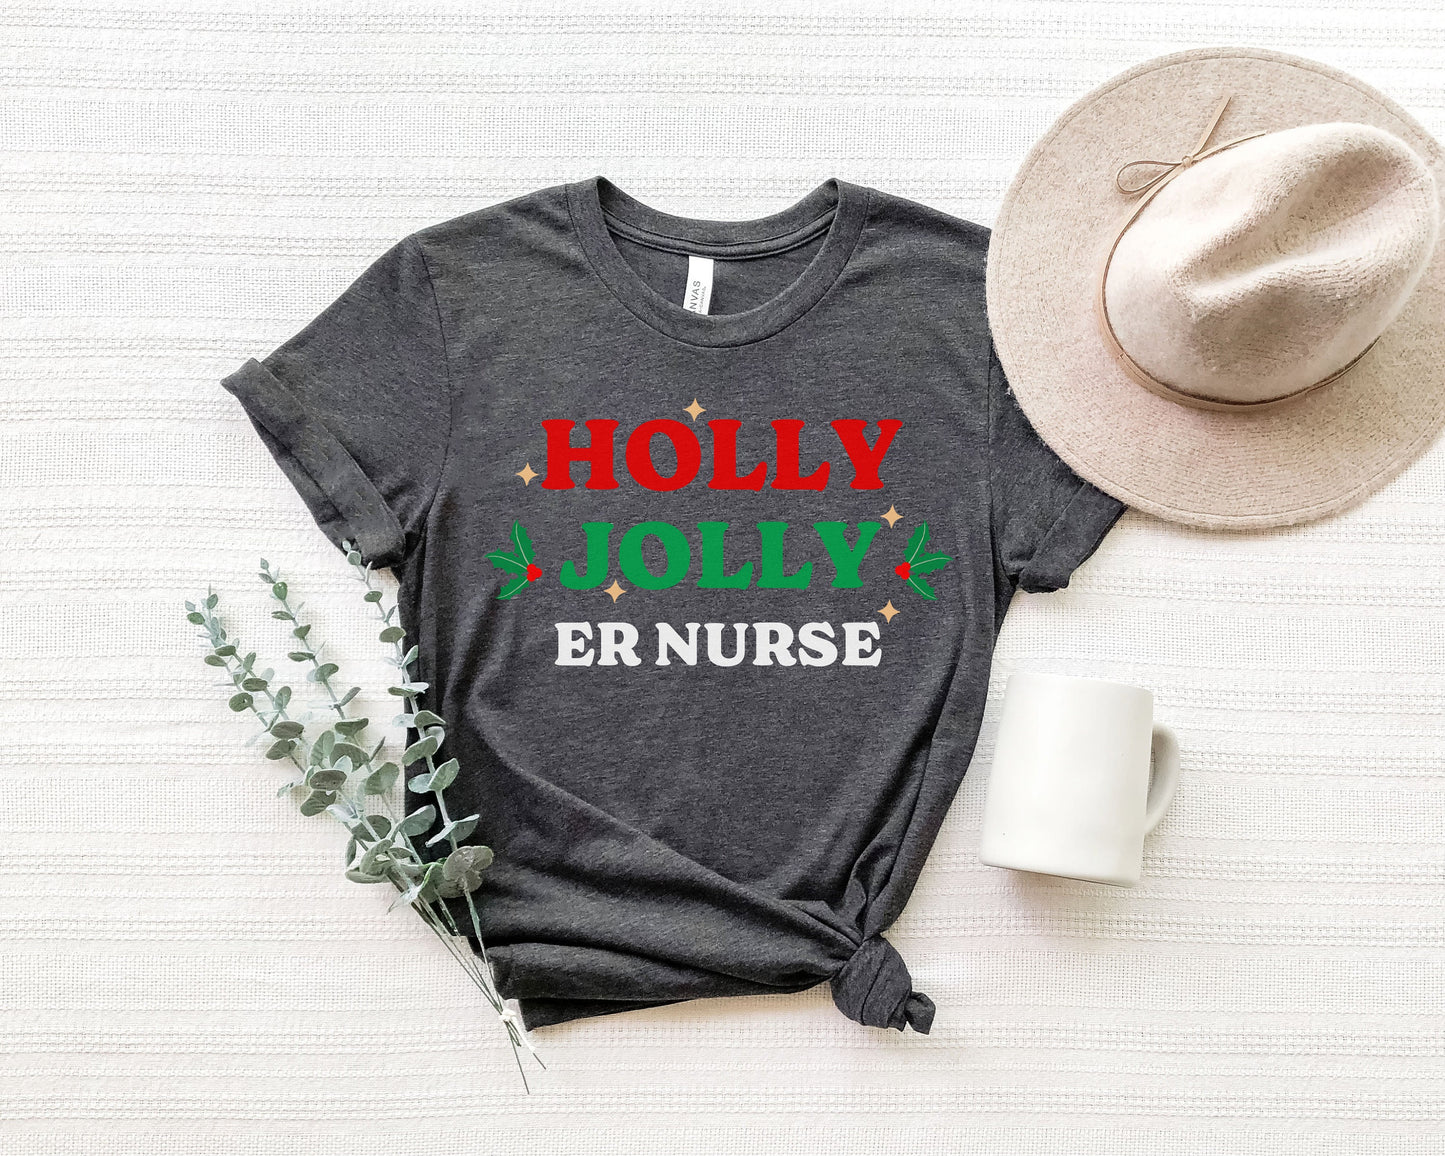 ER Nurse Christmas Shirt, Emergency Department Xmas Shirt, Christmas Gift for ER Nurse, ER Room Staff Tee, Secret Santa Nurse Present